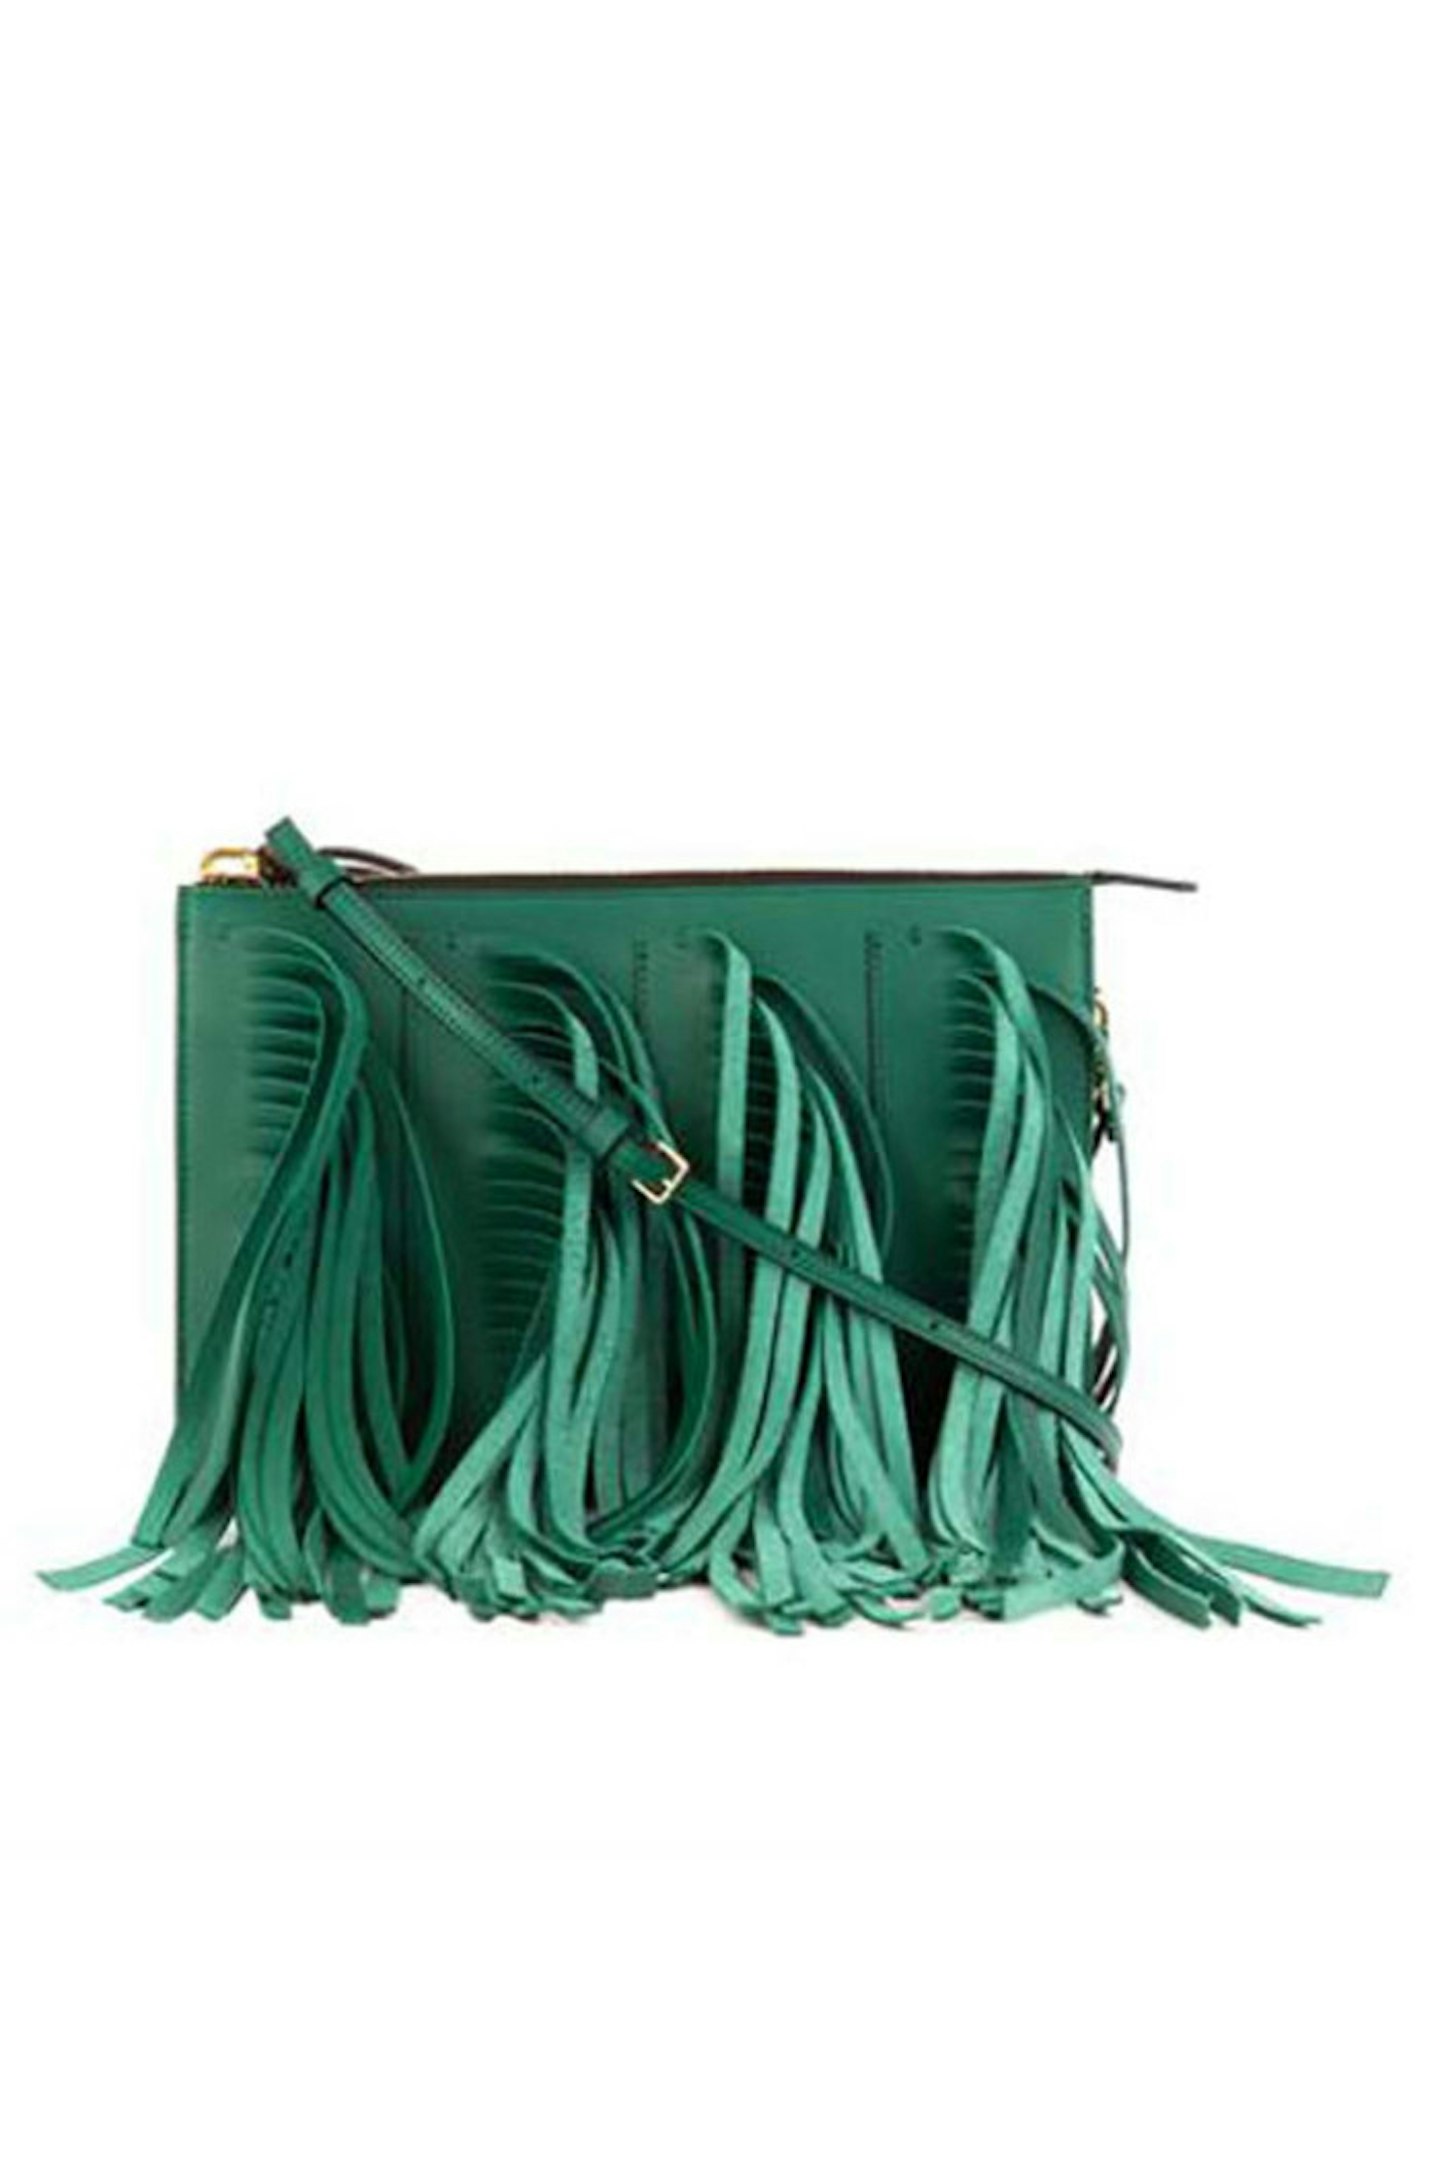 Green fringed Leather Bag, £670, Marni at Matchesfashion